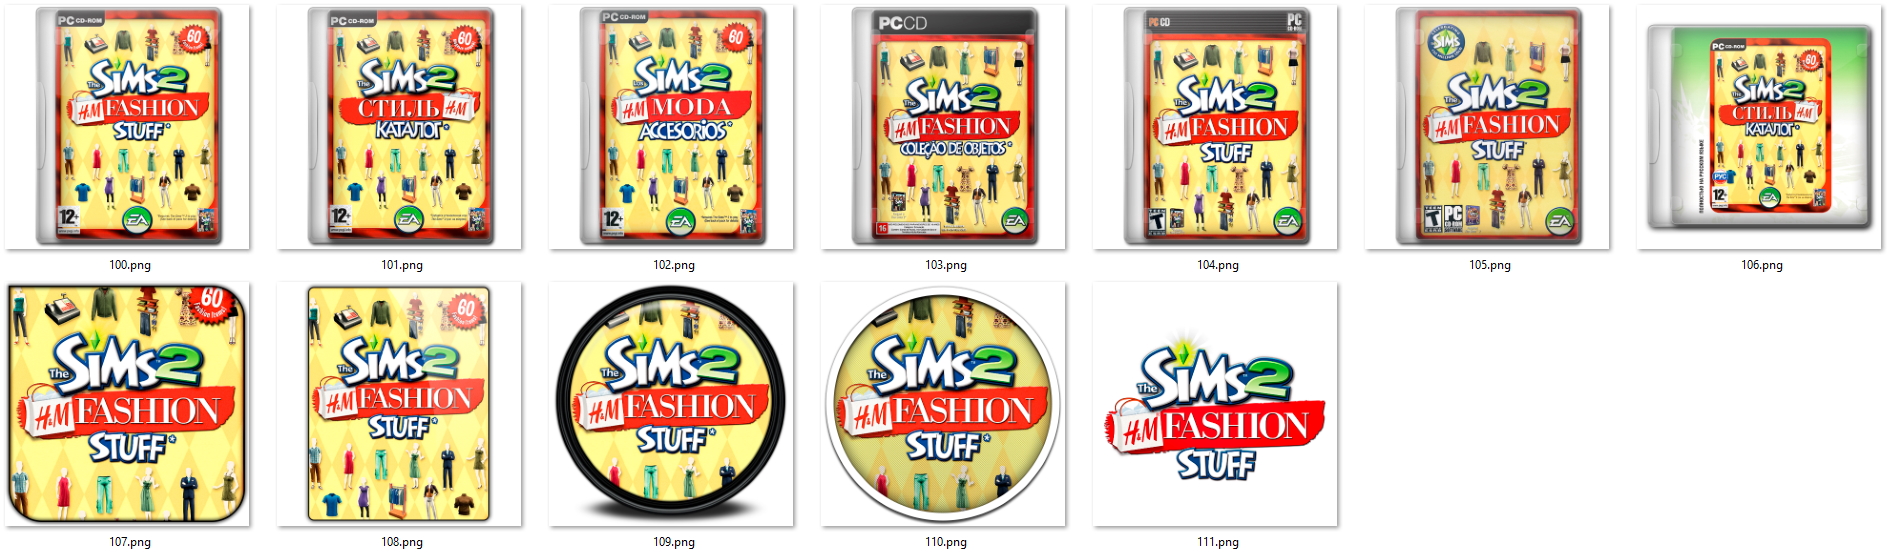 Иконки из набора к игре Sims 2 H&M Fashion Stuff